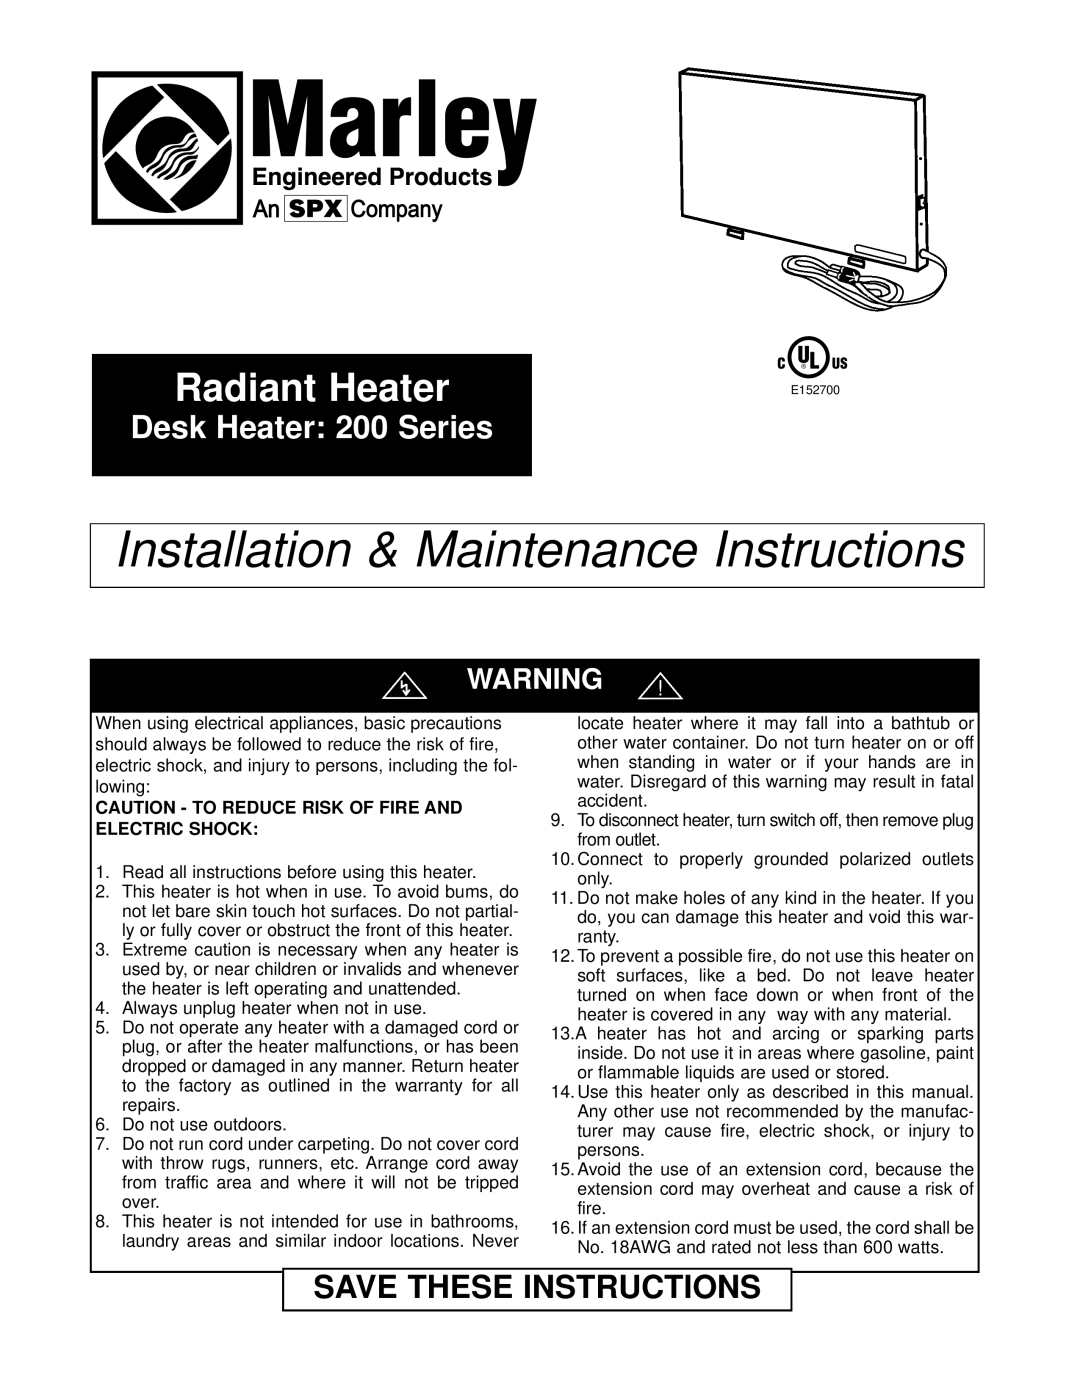 Marley Engineered Products Radiant Heater warranty Installation & Maintenance Instructions, Desk Heater 200 Series 